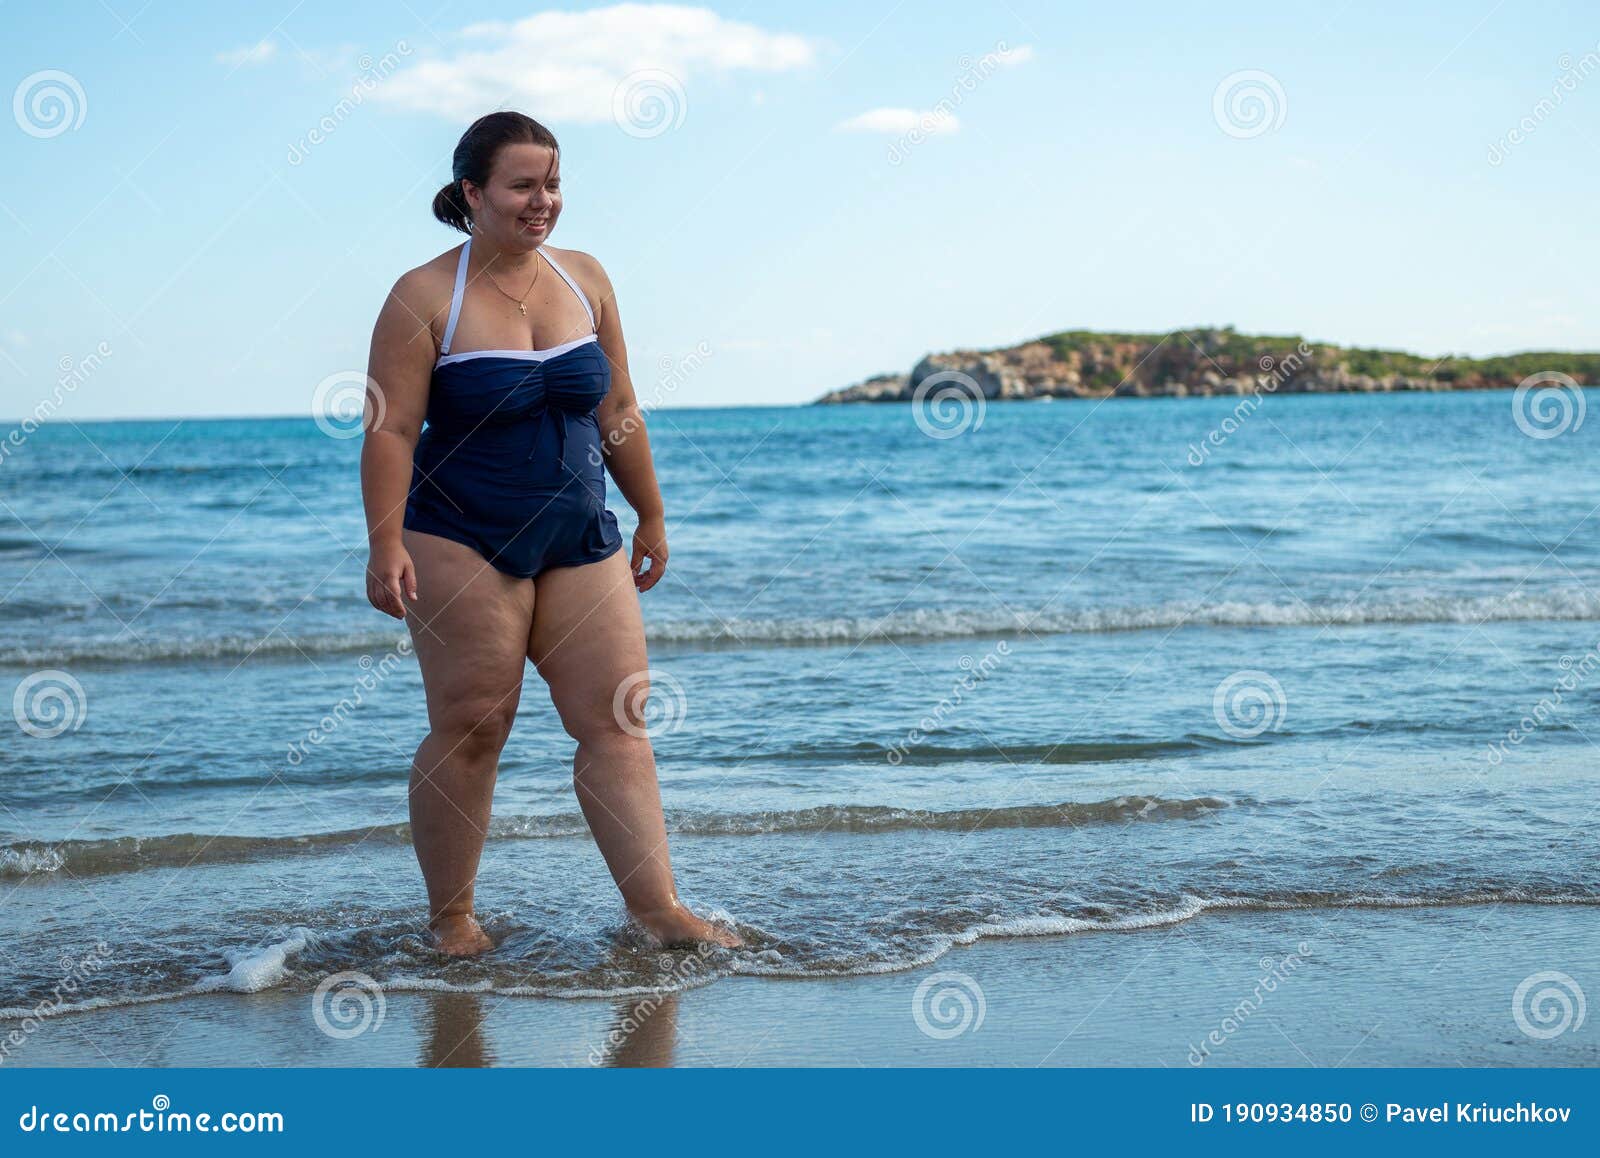 Curvy Girls At Nude Beaches